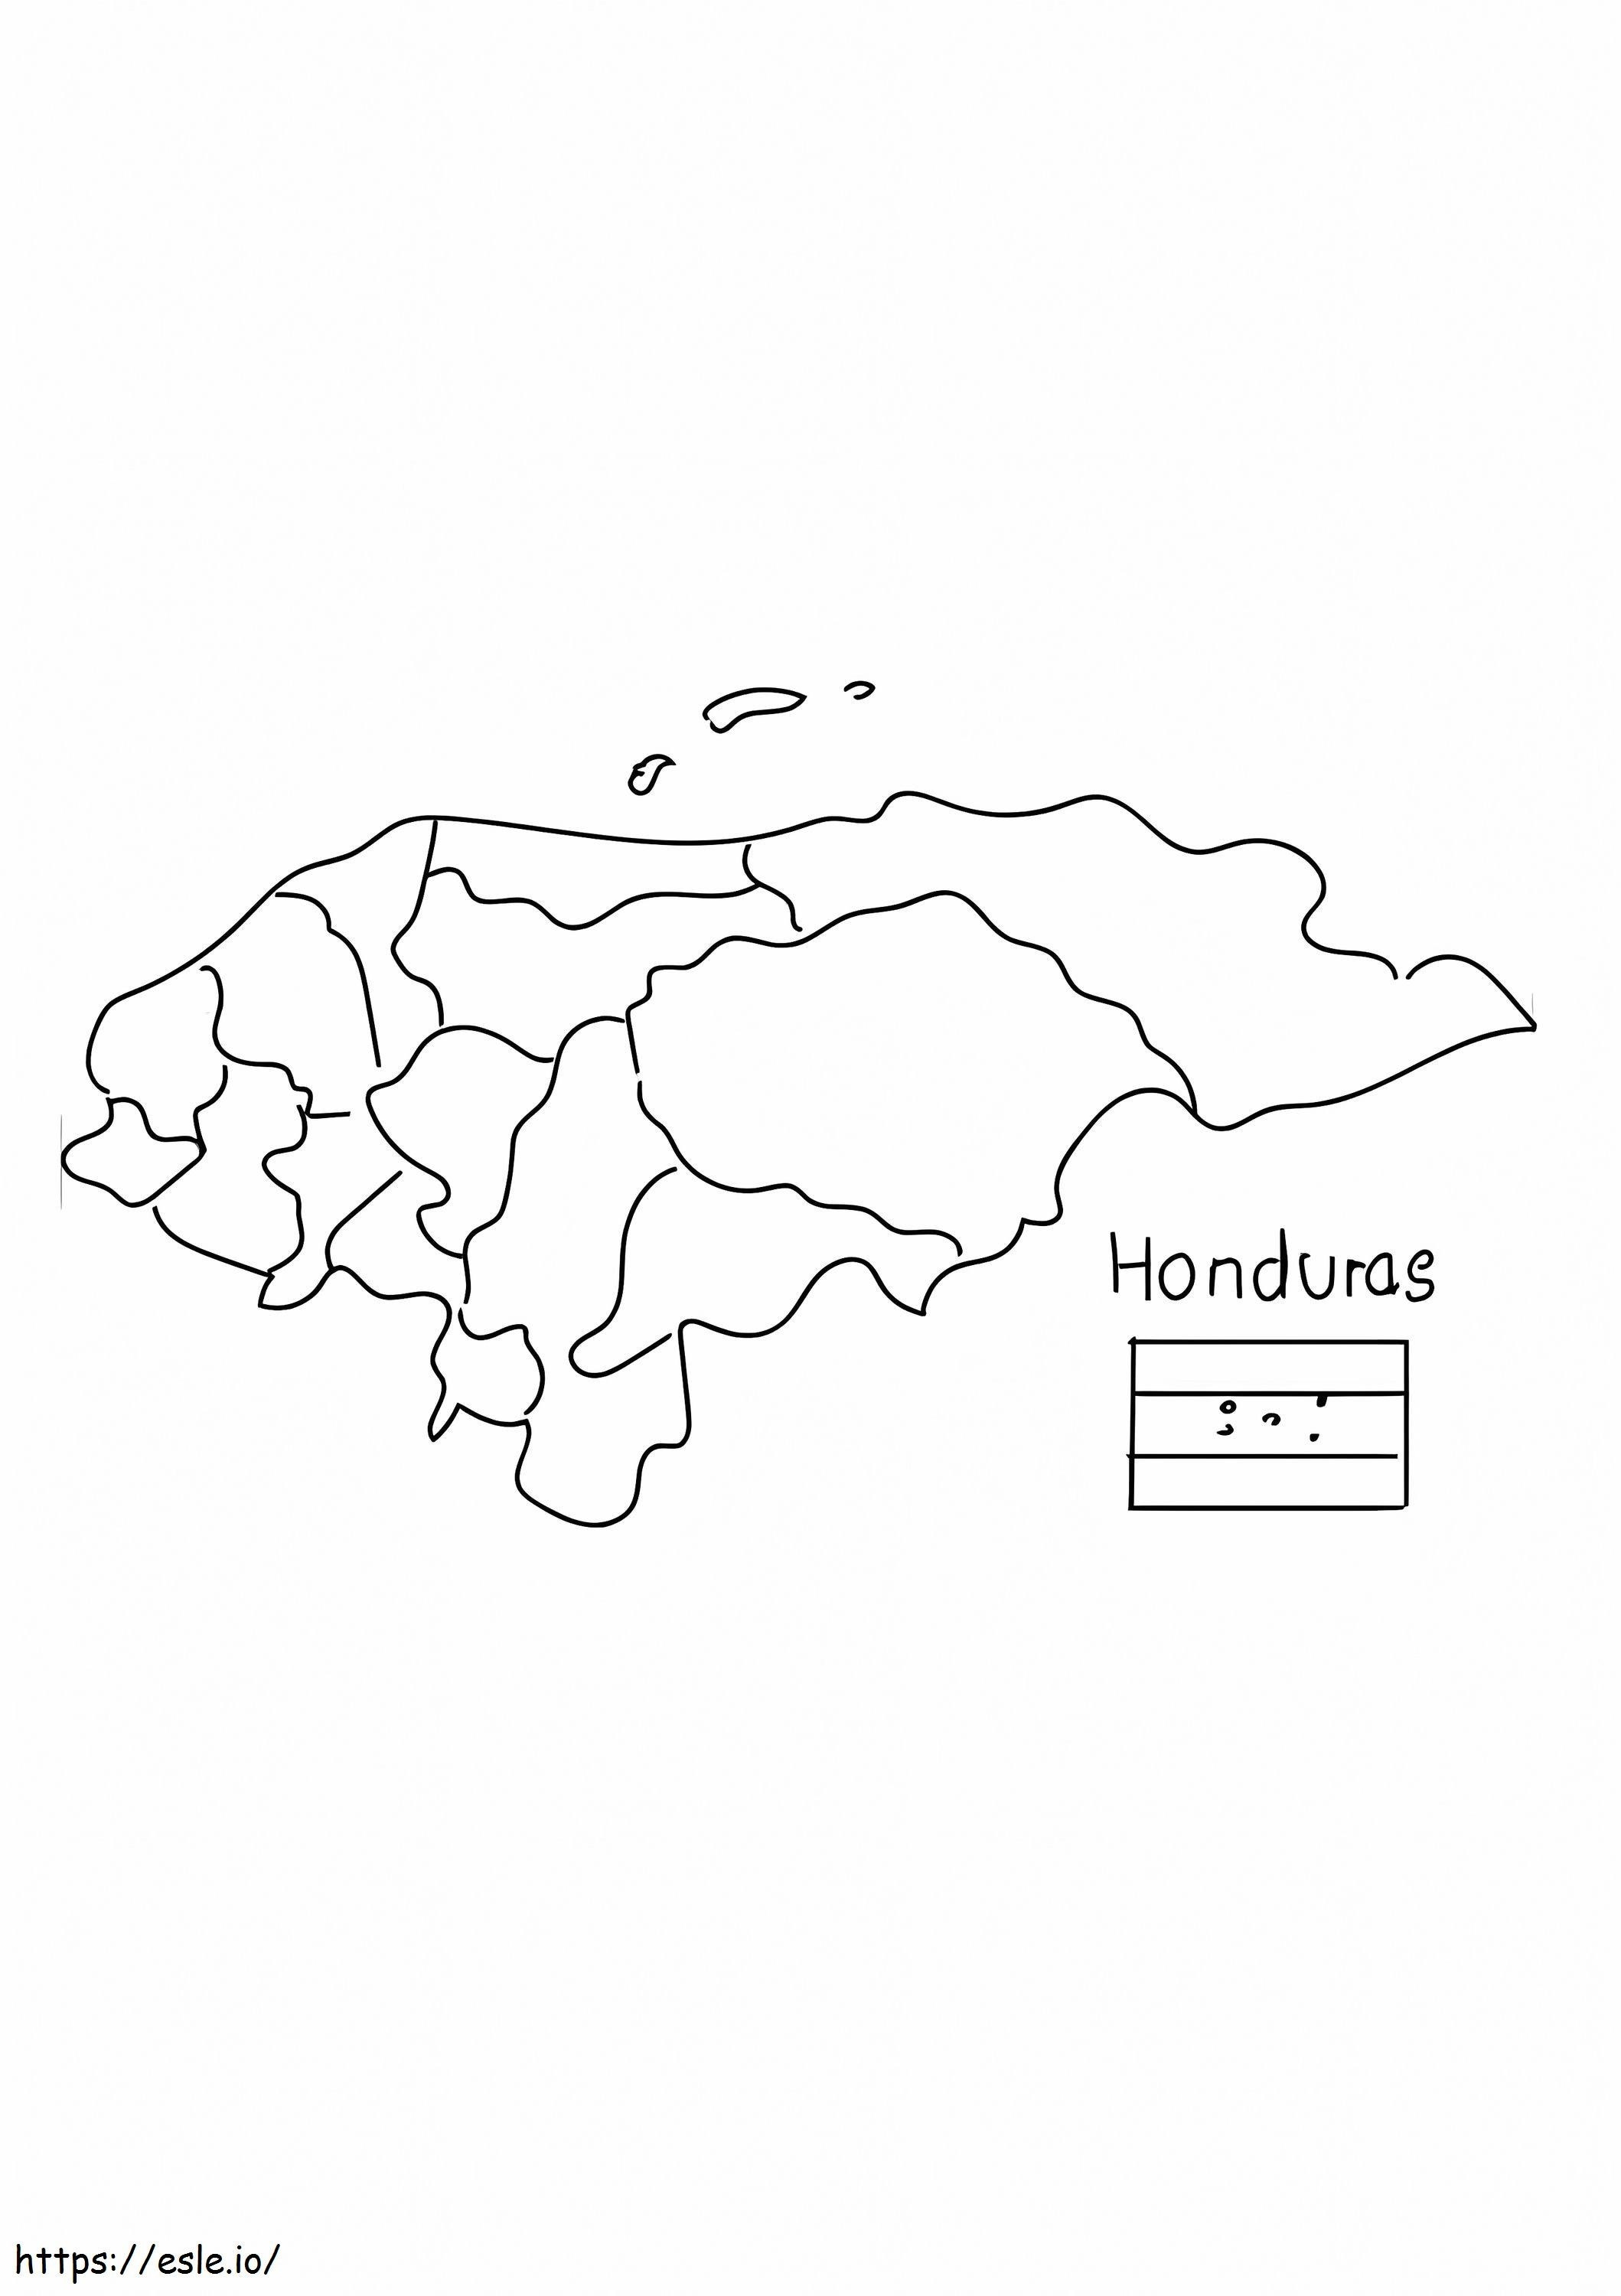 Honduras-Karte ausmalbilder